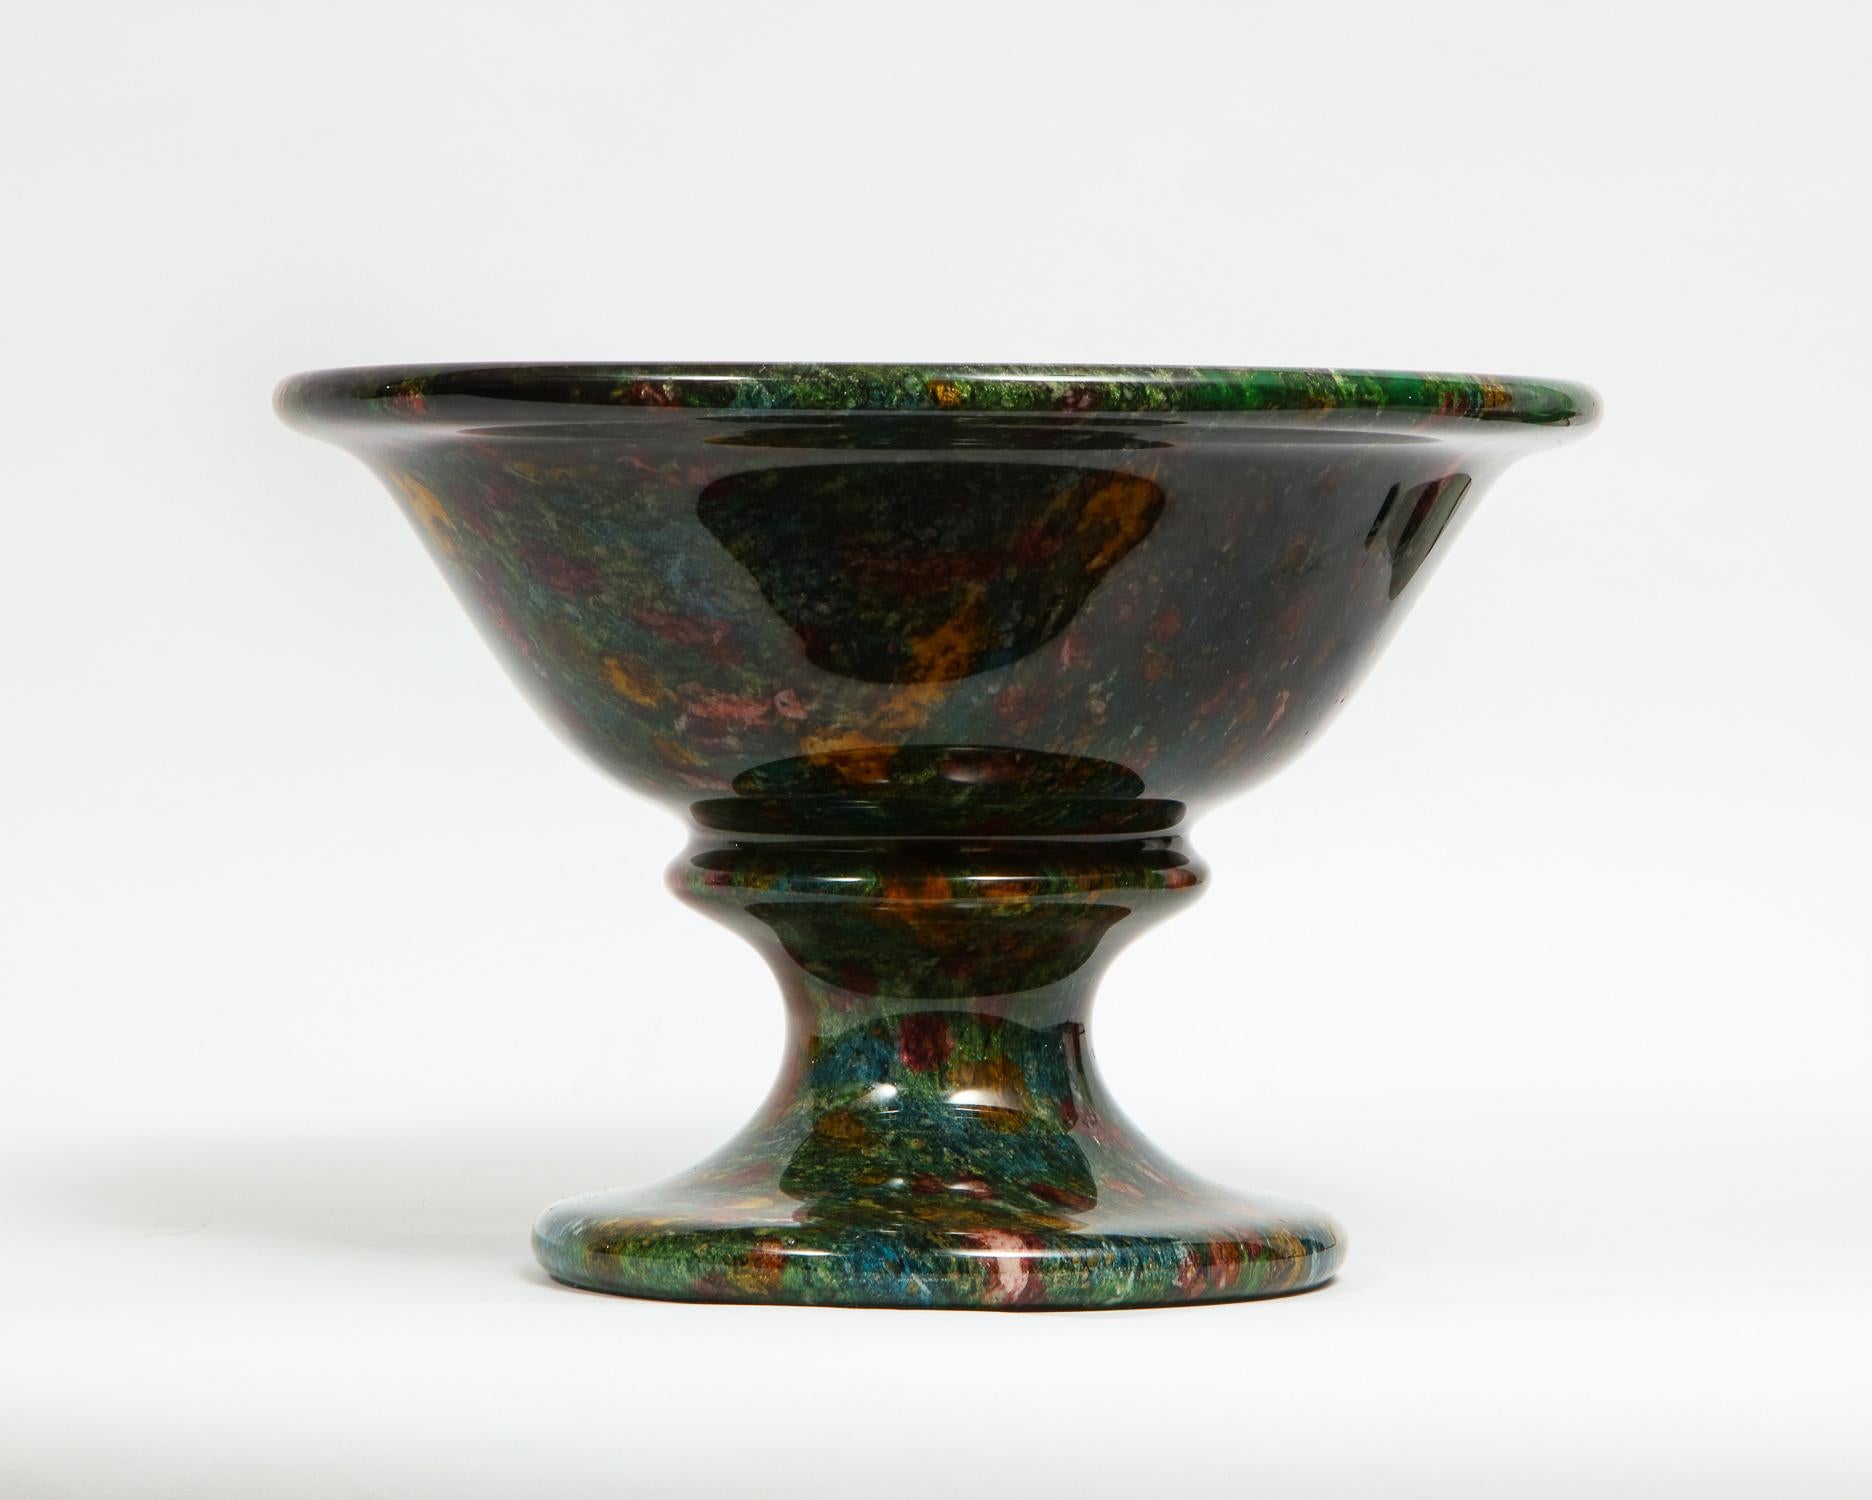 Indonesian Rare and Large Decorative Green Jasper Bowl Centerpiece